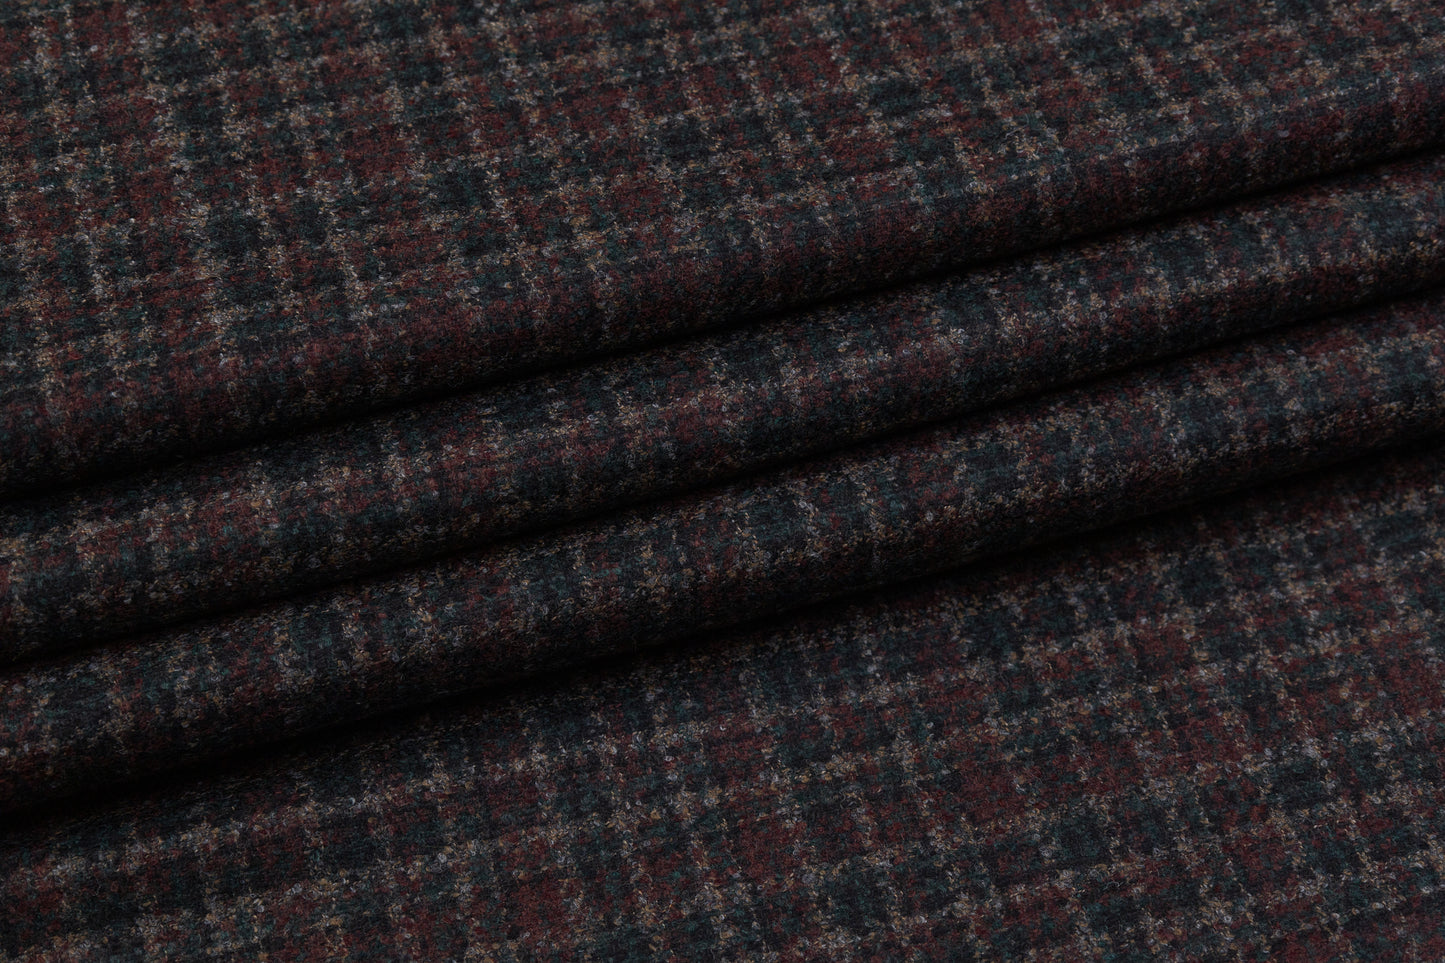 Checked Italian Wool Tweed - Green / Burgundy